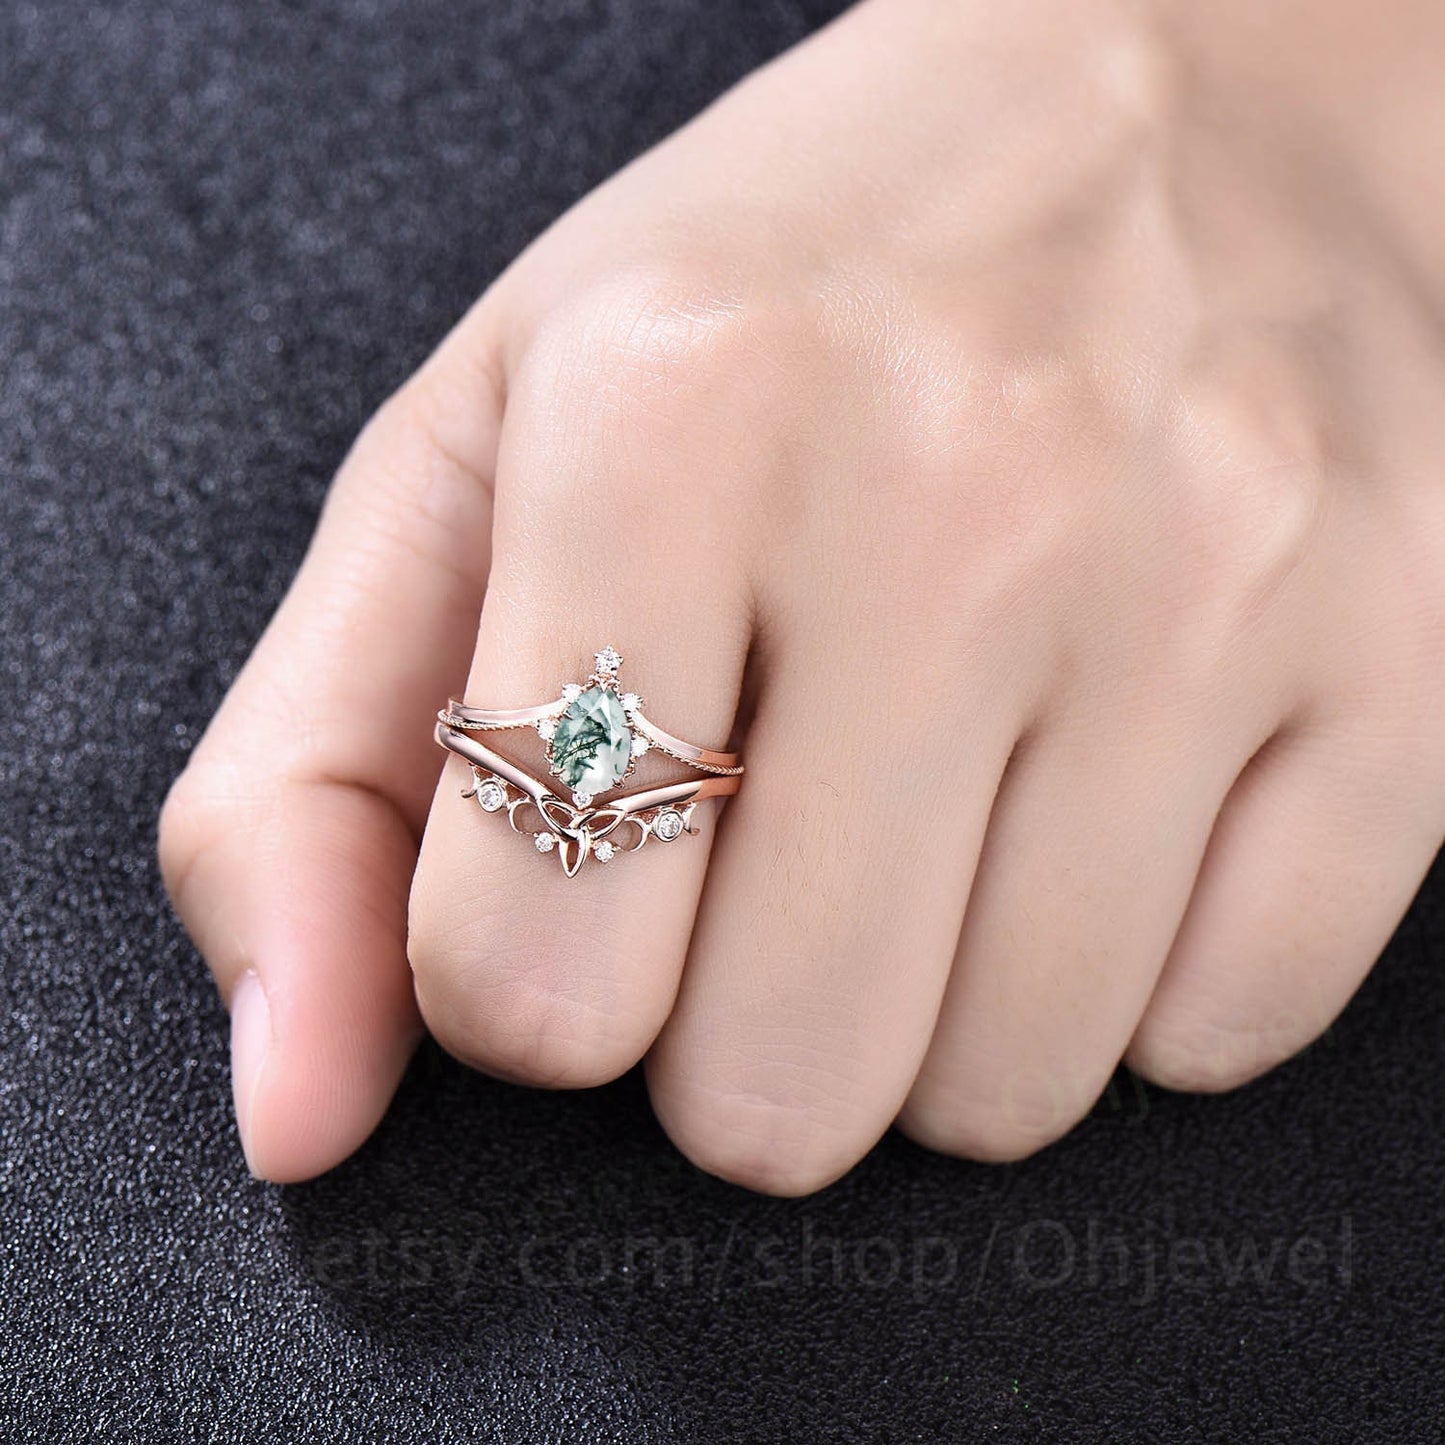 Pear shaped moss agate engagement ring set 14k white gold organic gemstone ring milgrain moissanite ring for women norse viking ring Jewelry